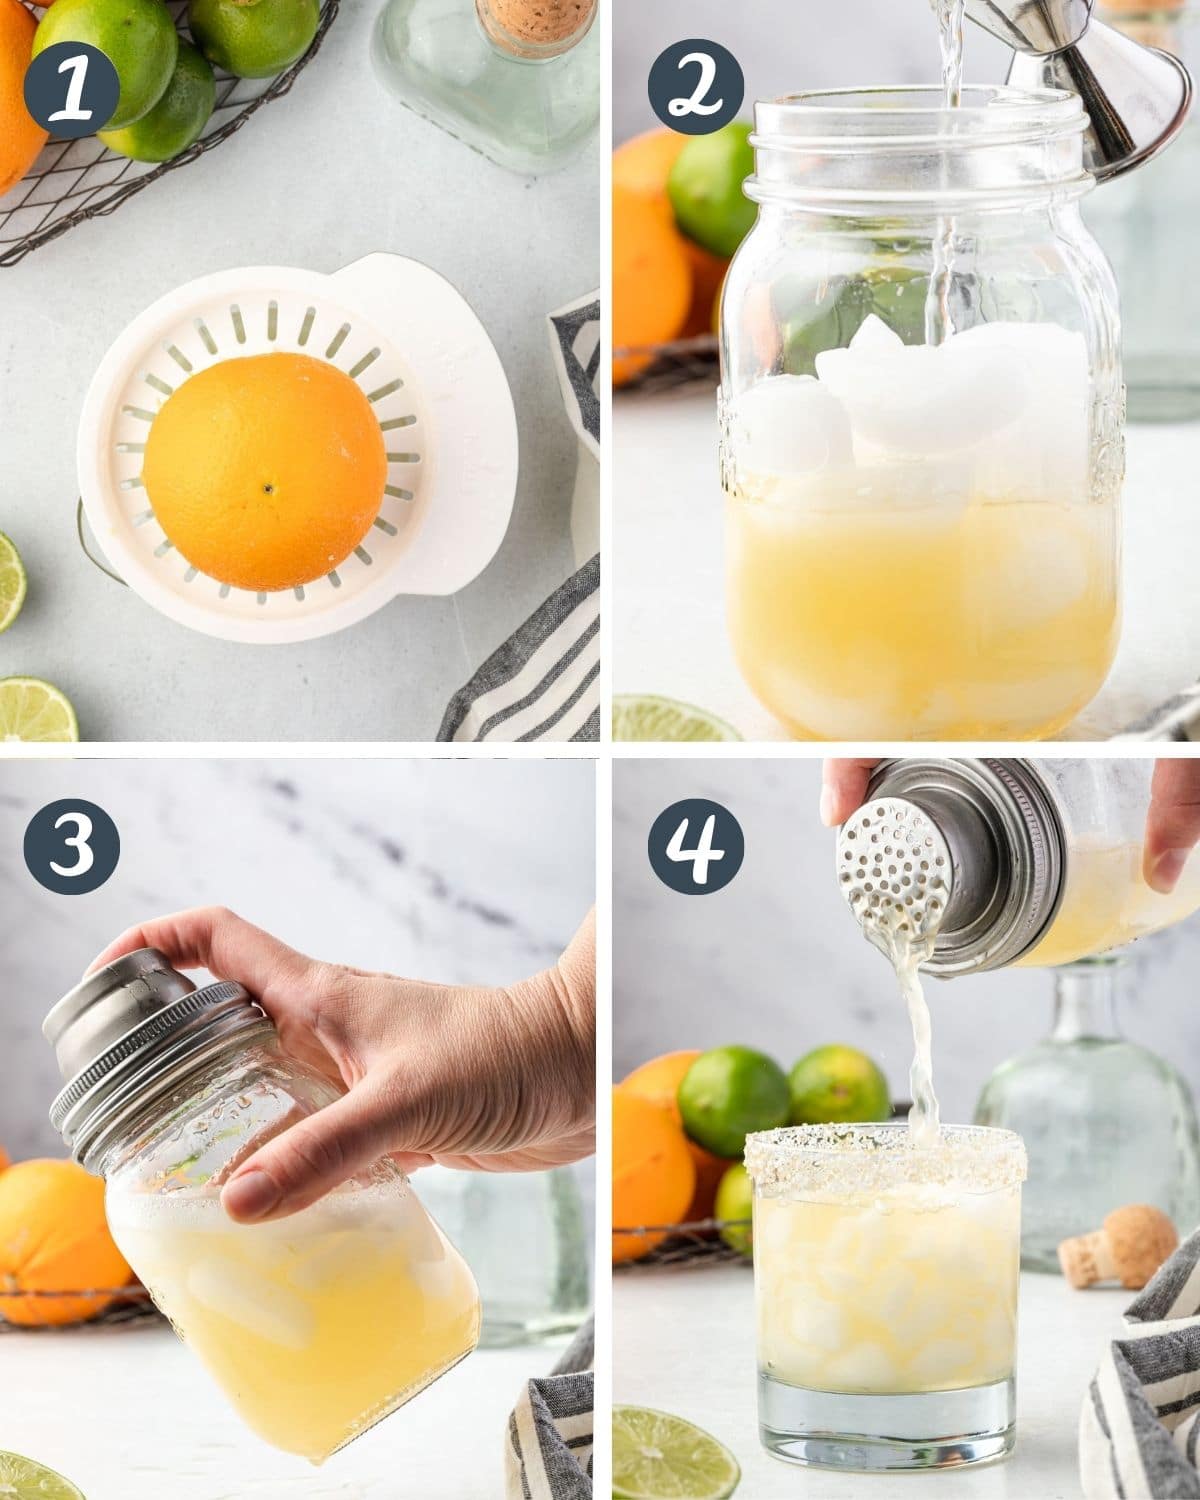 Collage showing 4 steps to making margarita.